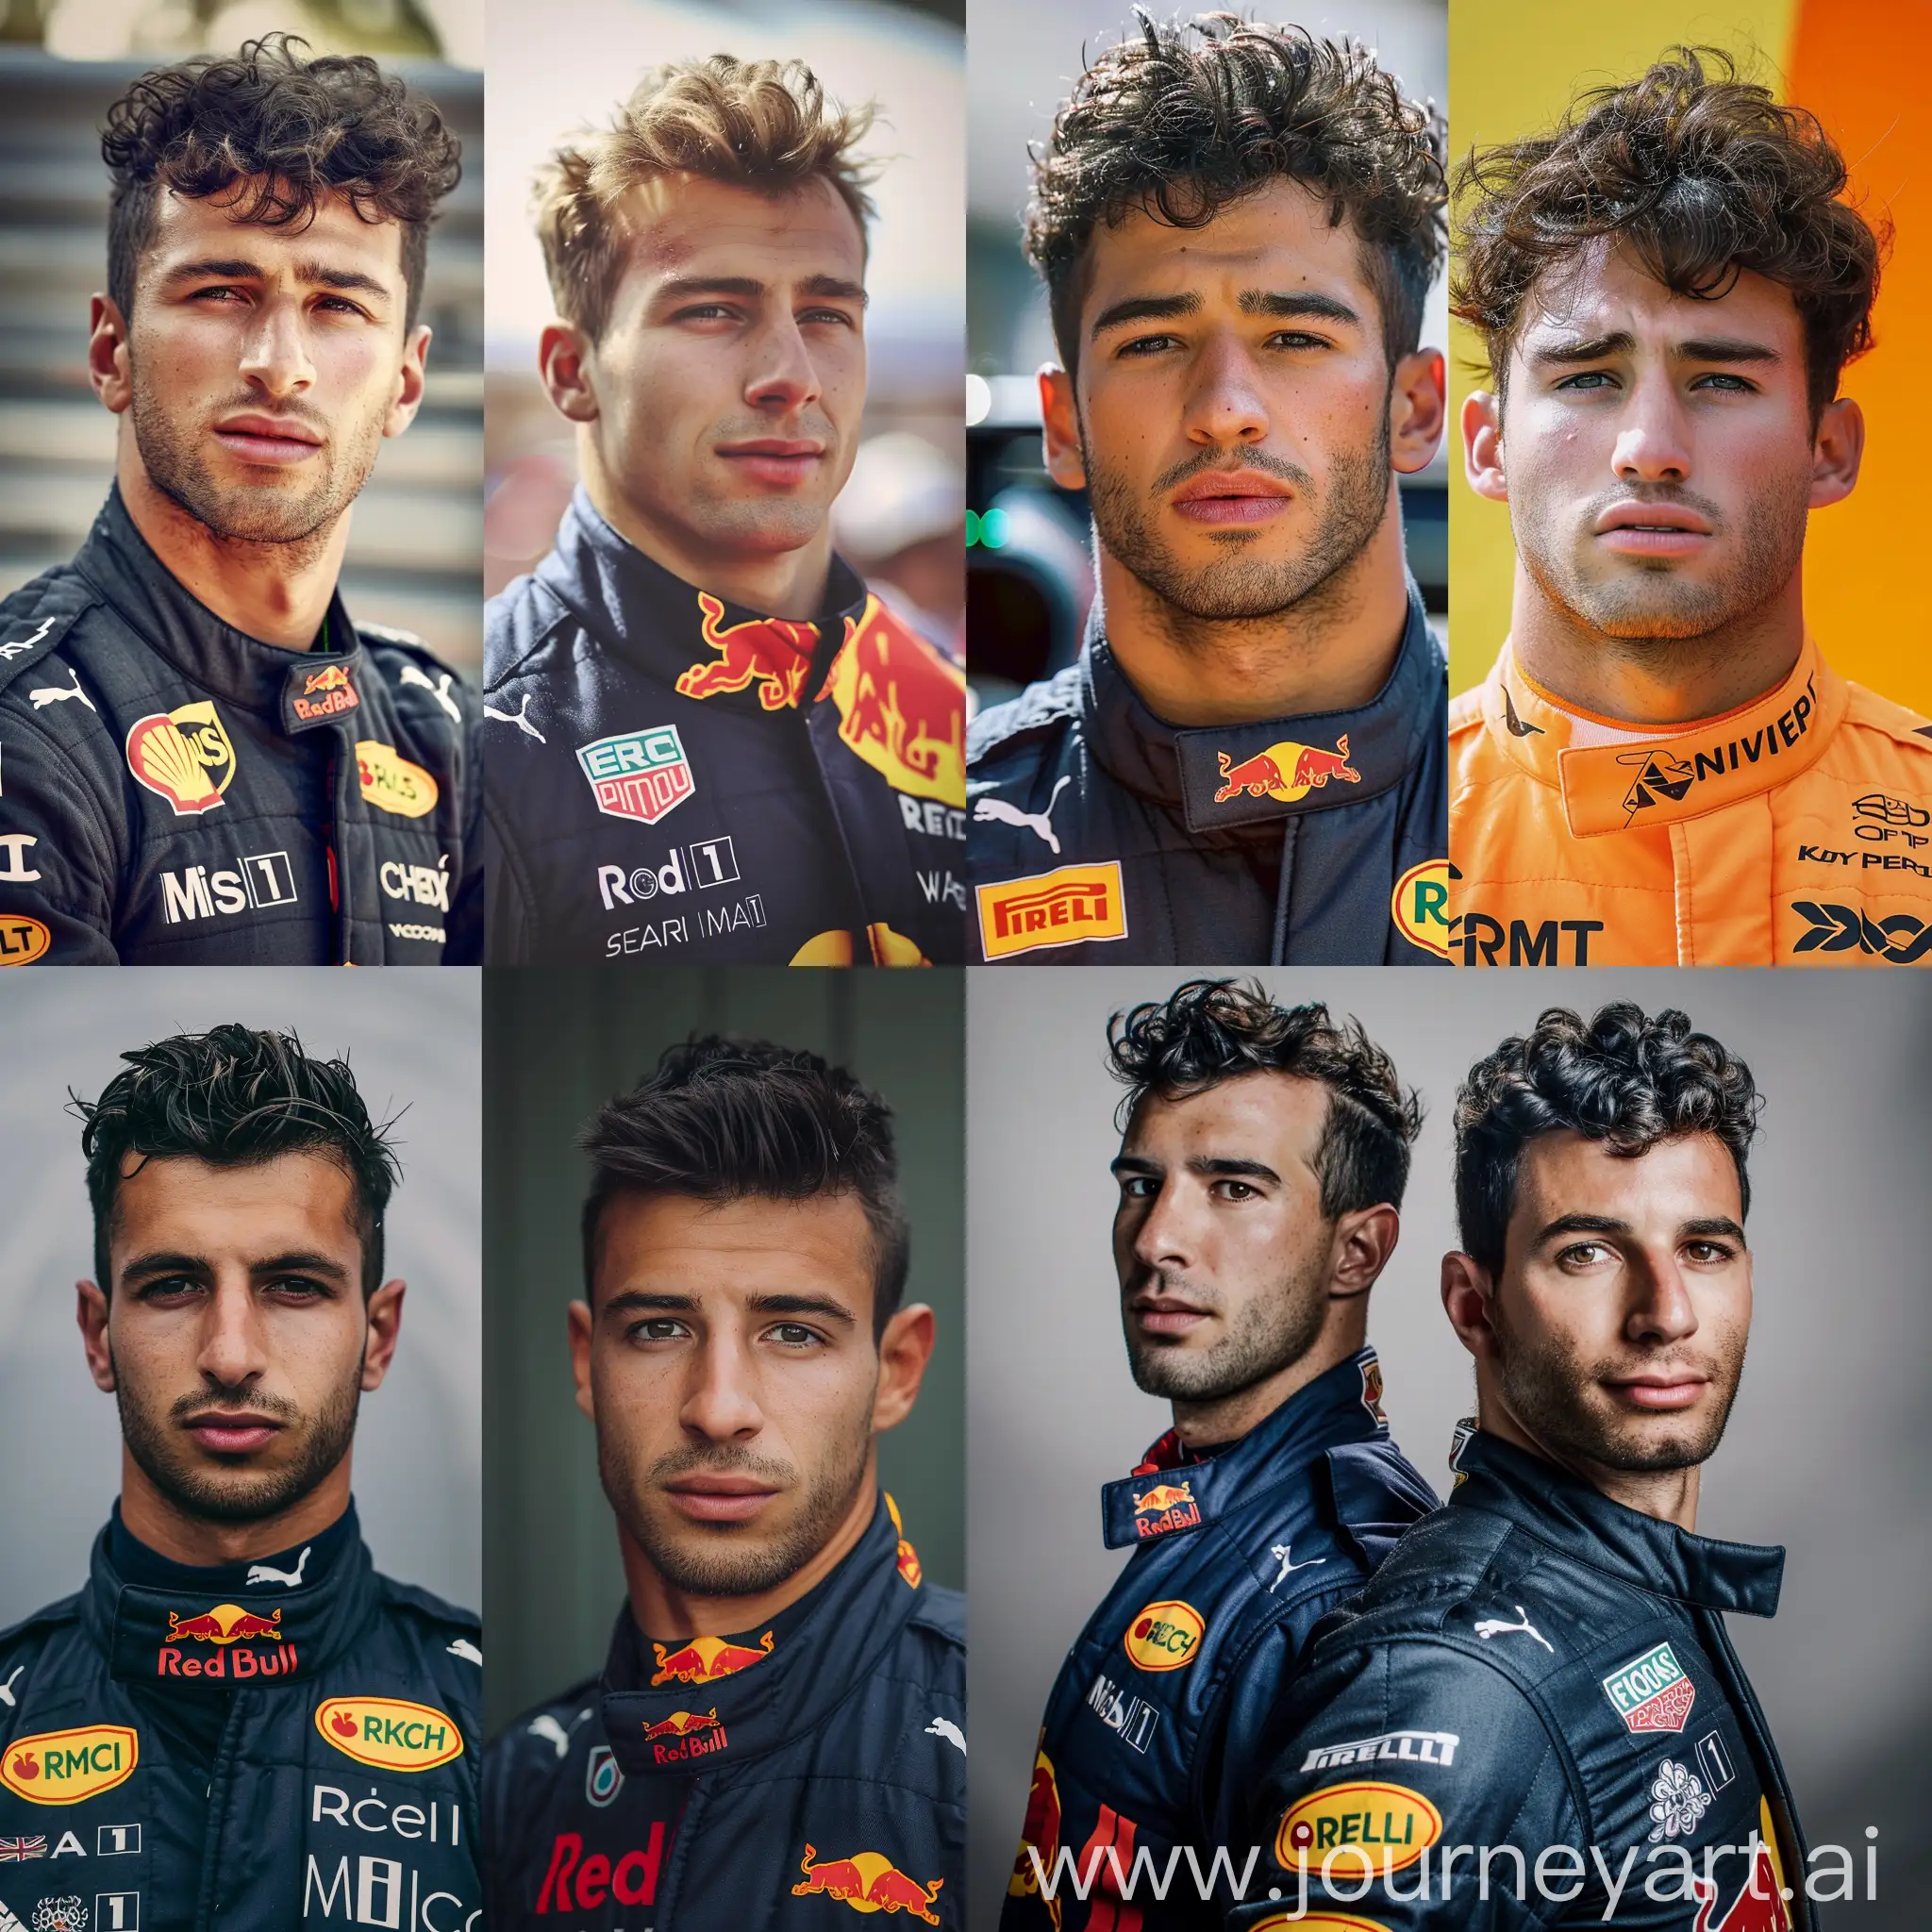 Portrait-of-the-Imagined-Adult-Son-of-Daniel-Ricciardo-and-Daniil-Kvyat